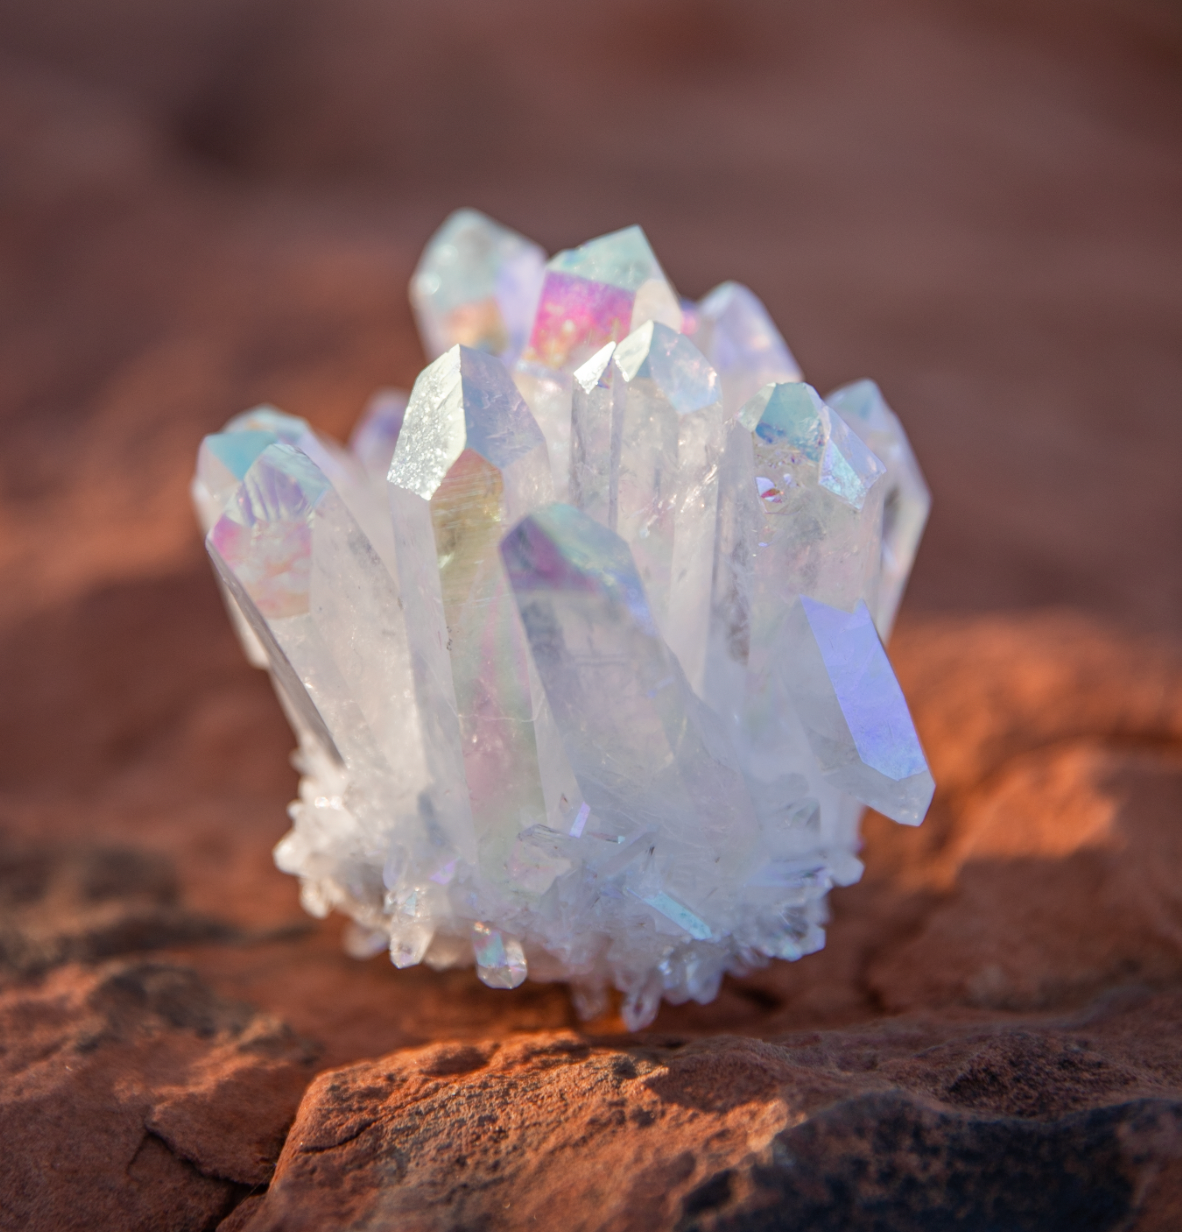 healing crystals: angel aura quartz crystal in sedona, arizona used for energy healing